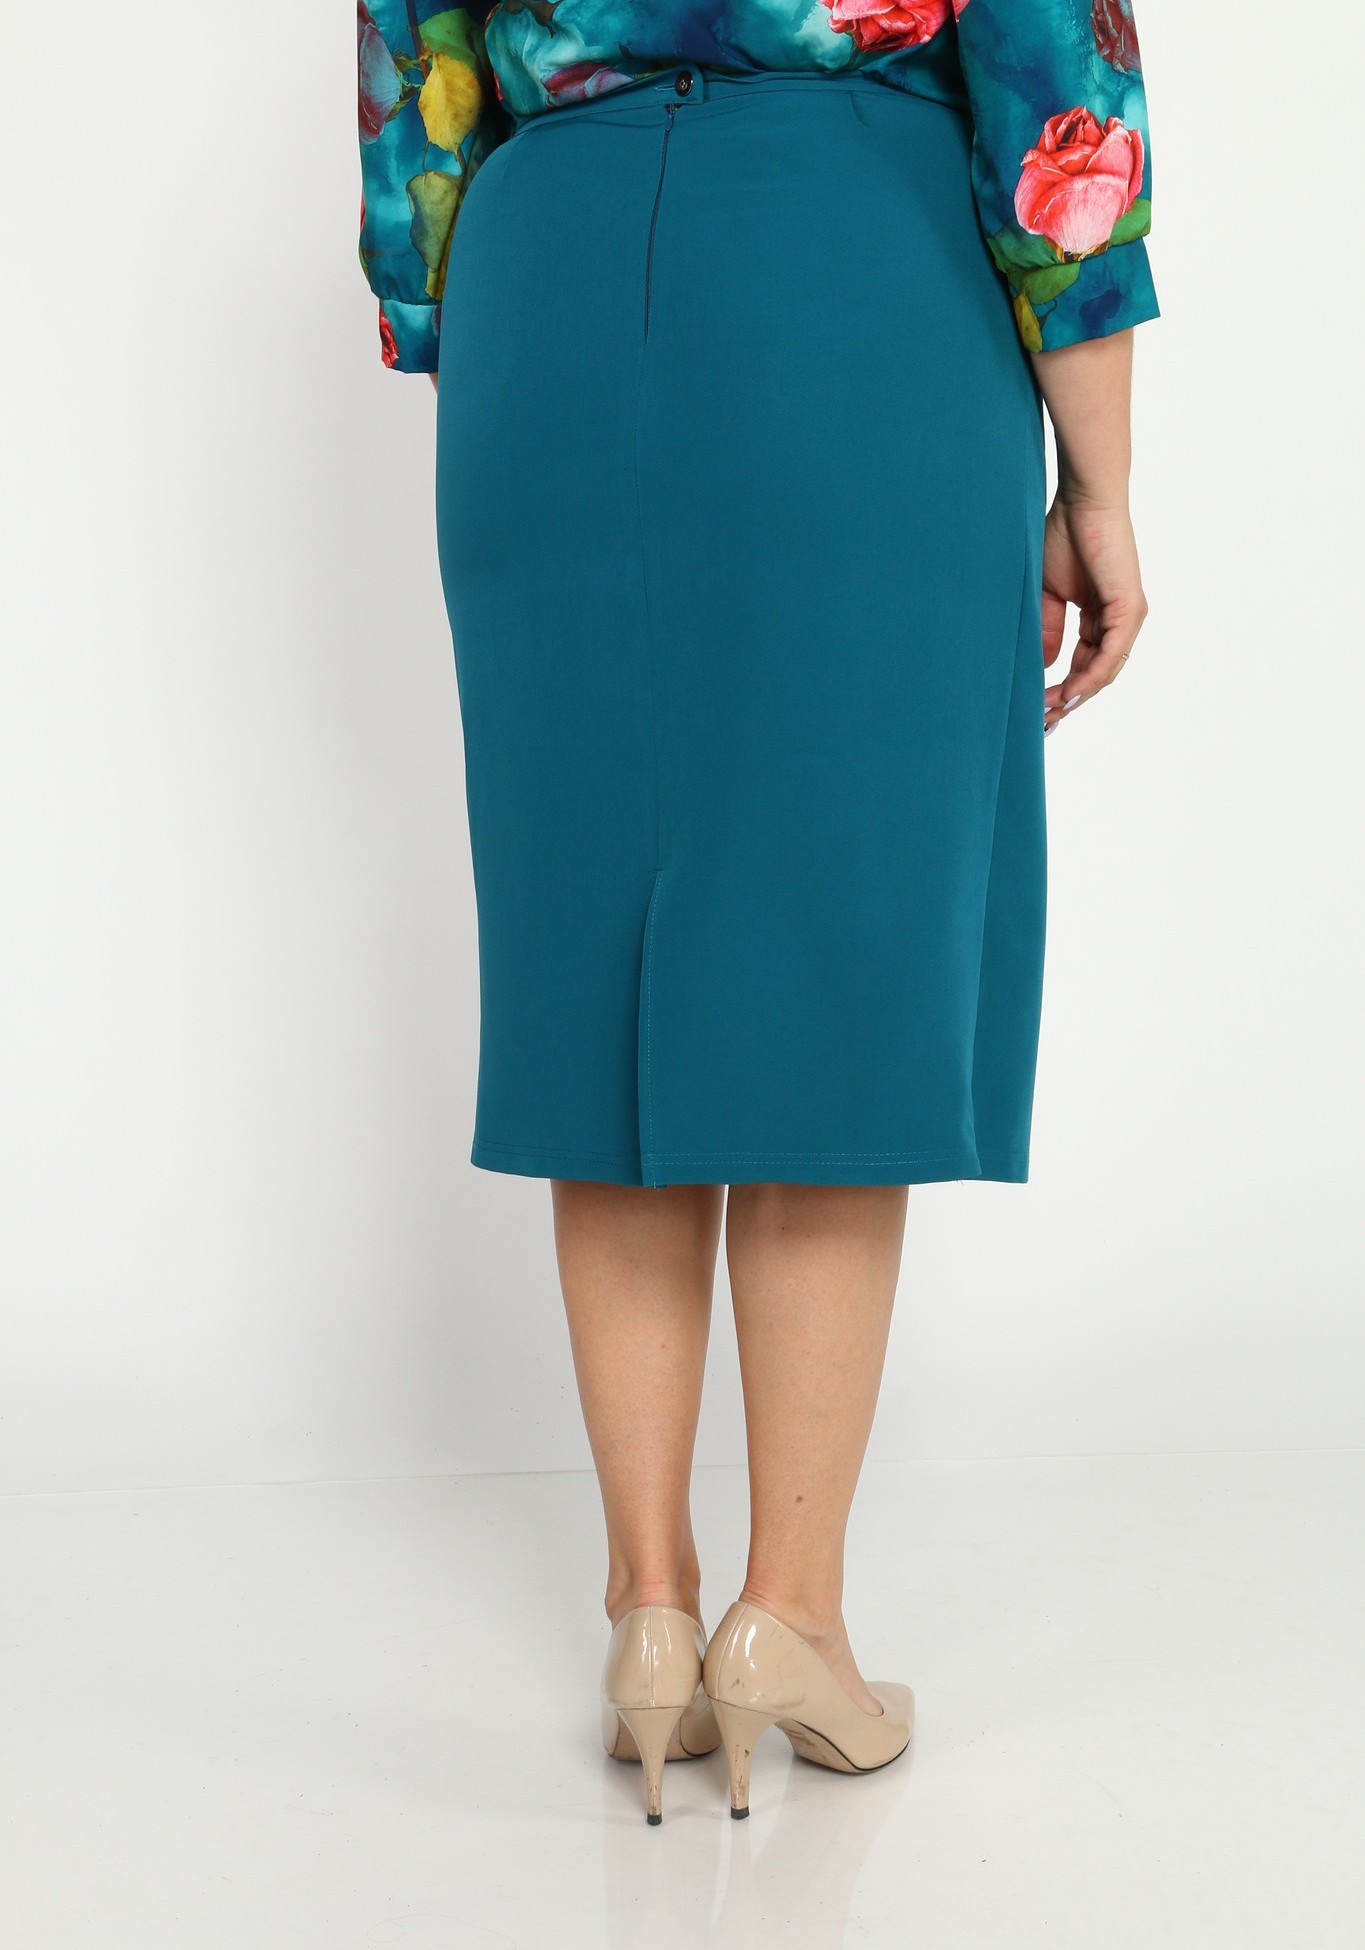 Юбка с кружевной вставкой Elegance Style, размер 64, цвет тёмно-синий - фото 5